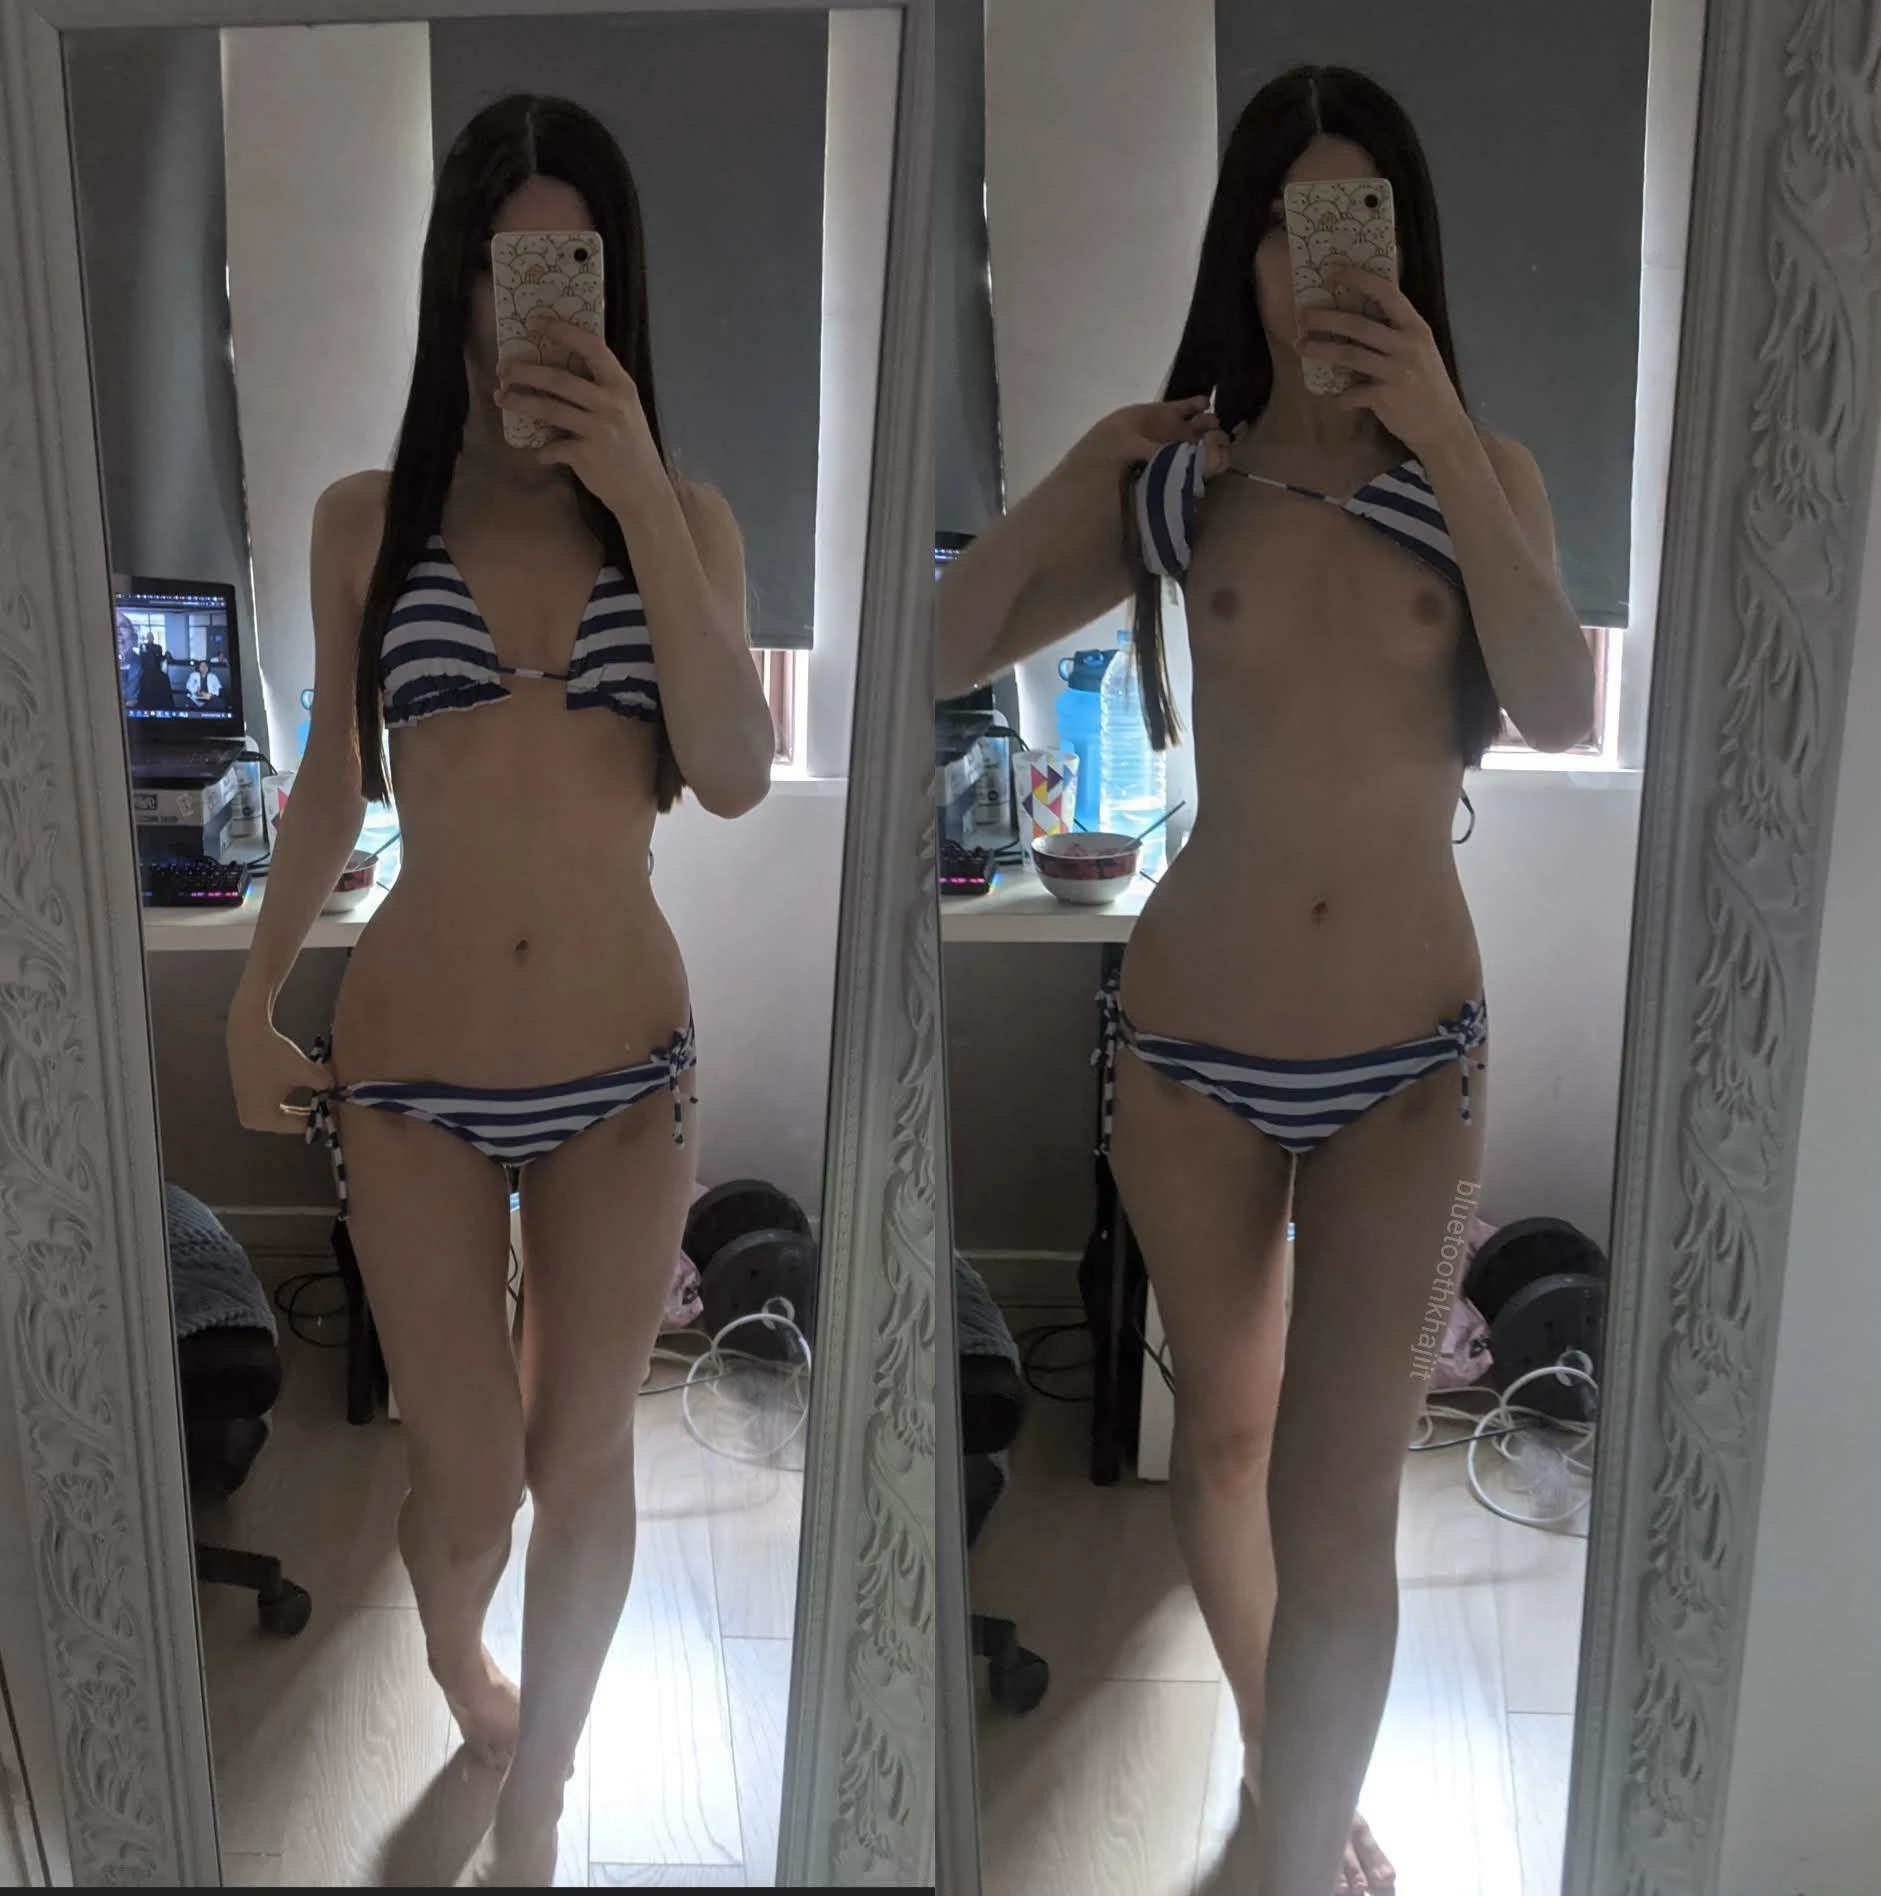 Is my bikini better on or off?